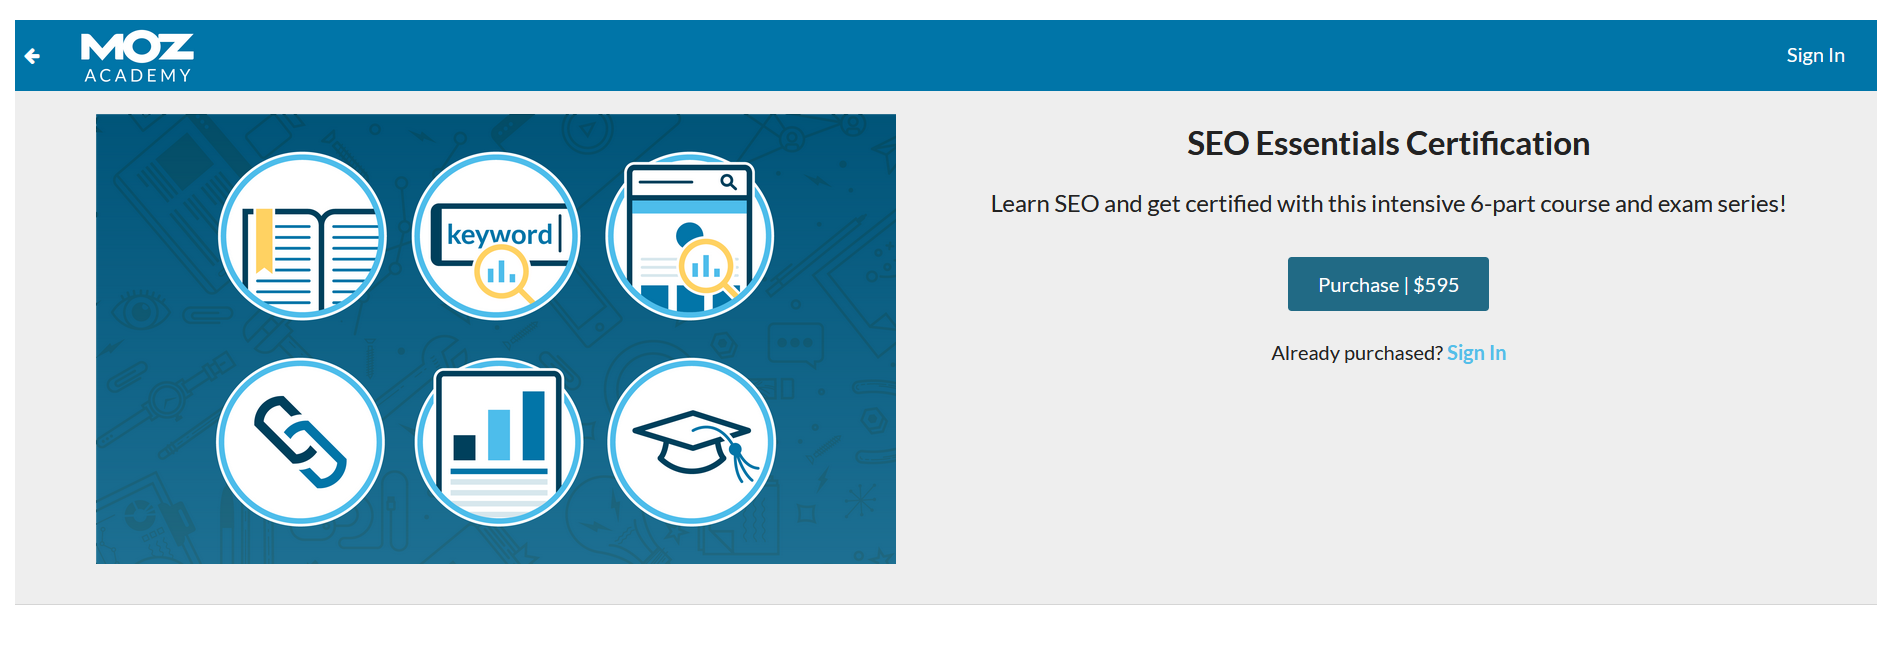 seo certification worth